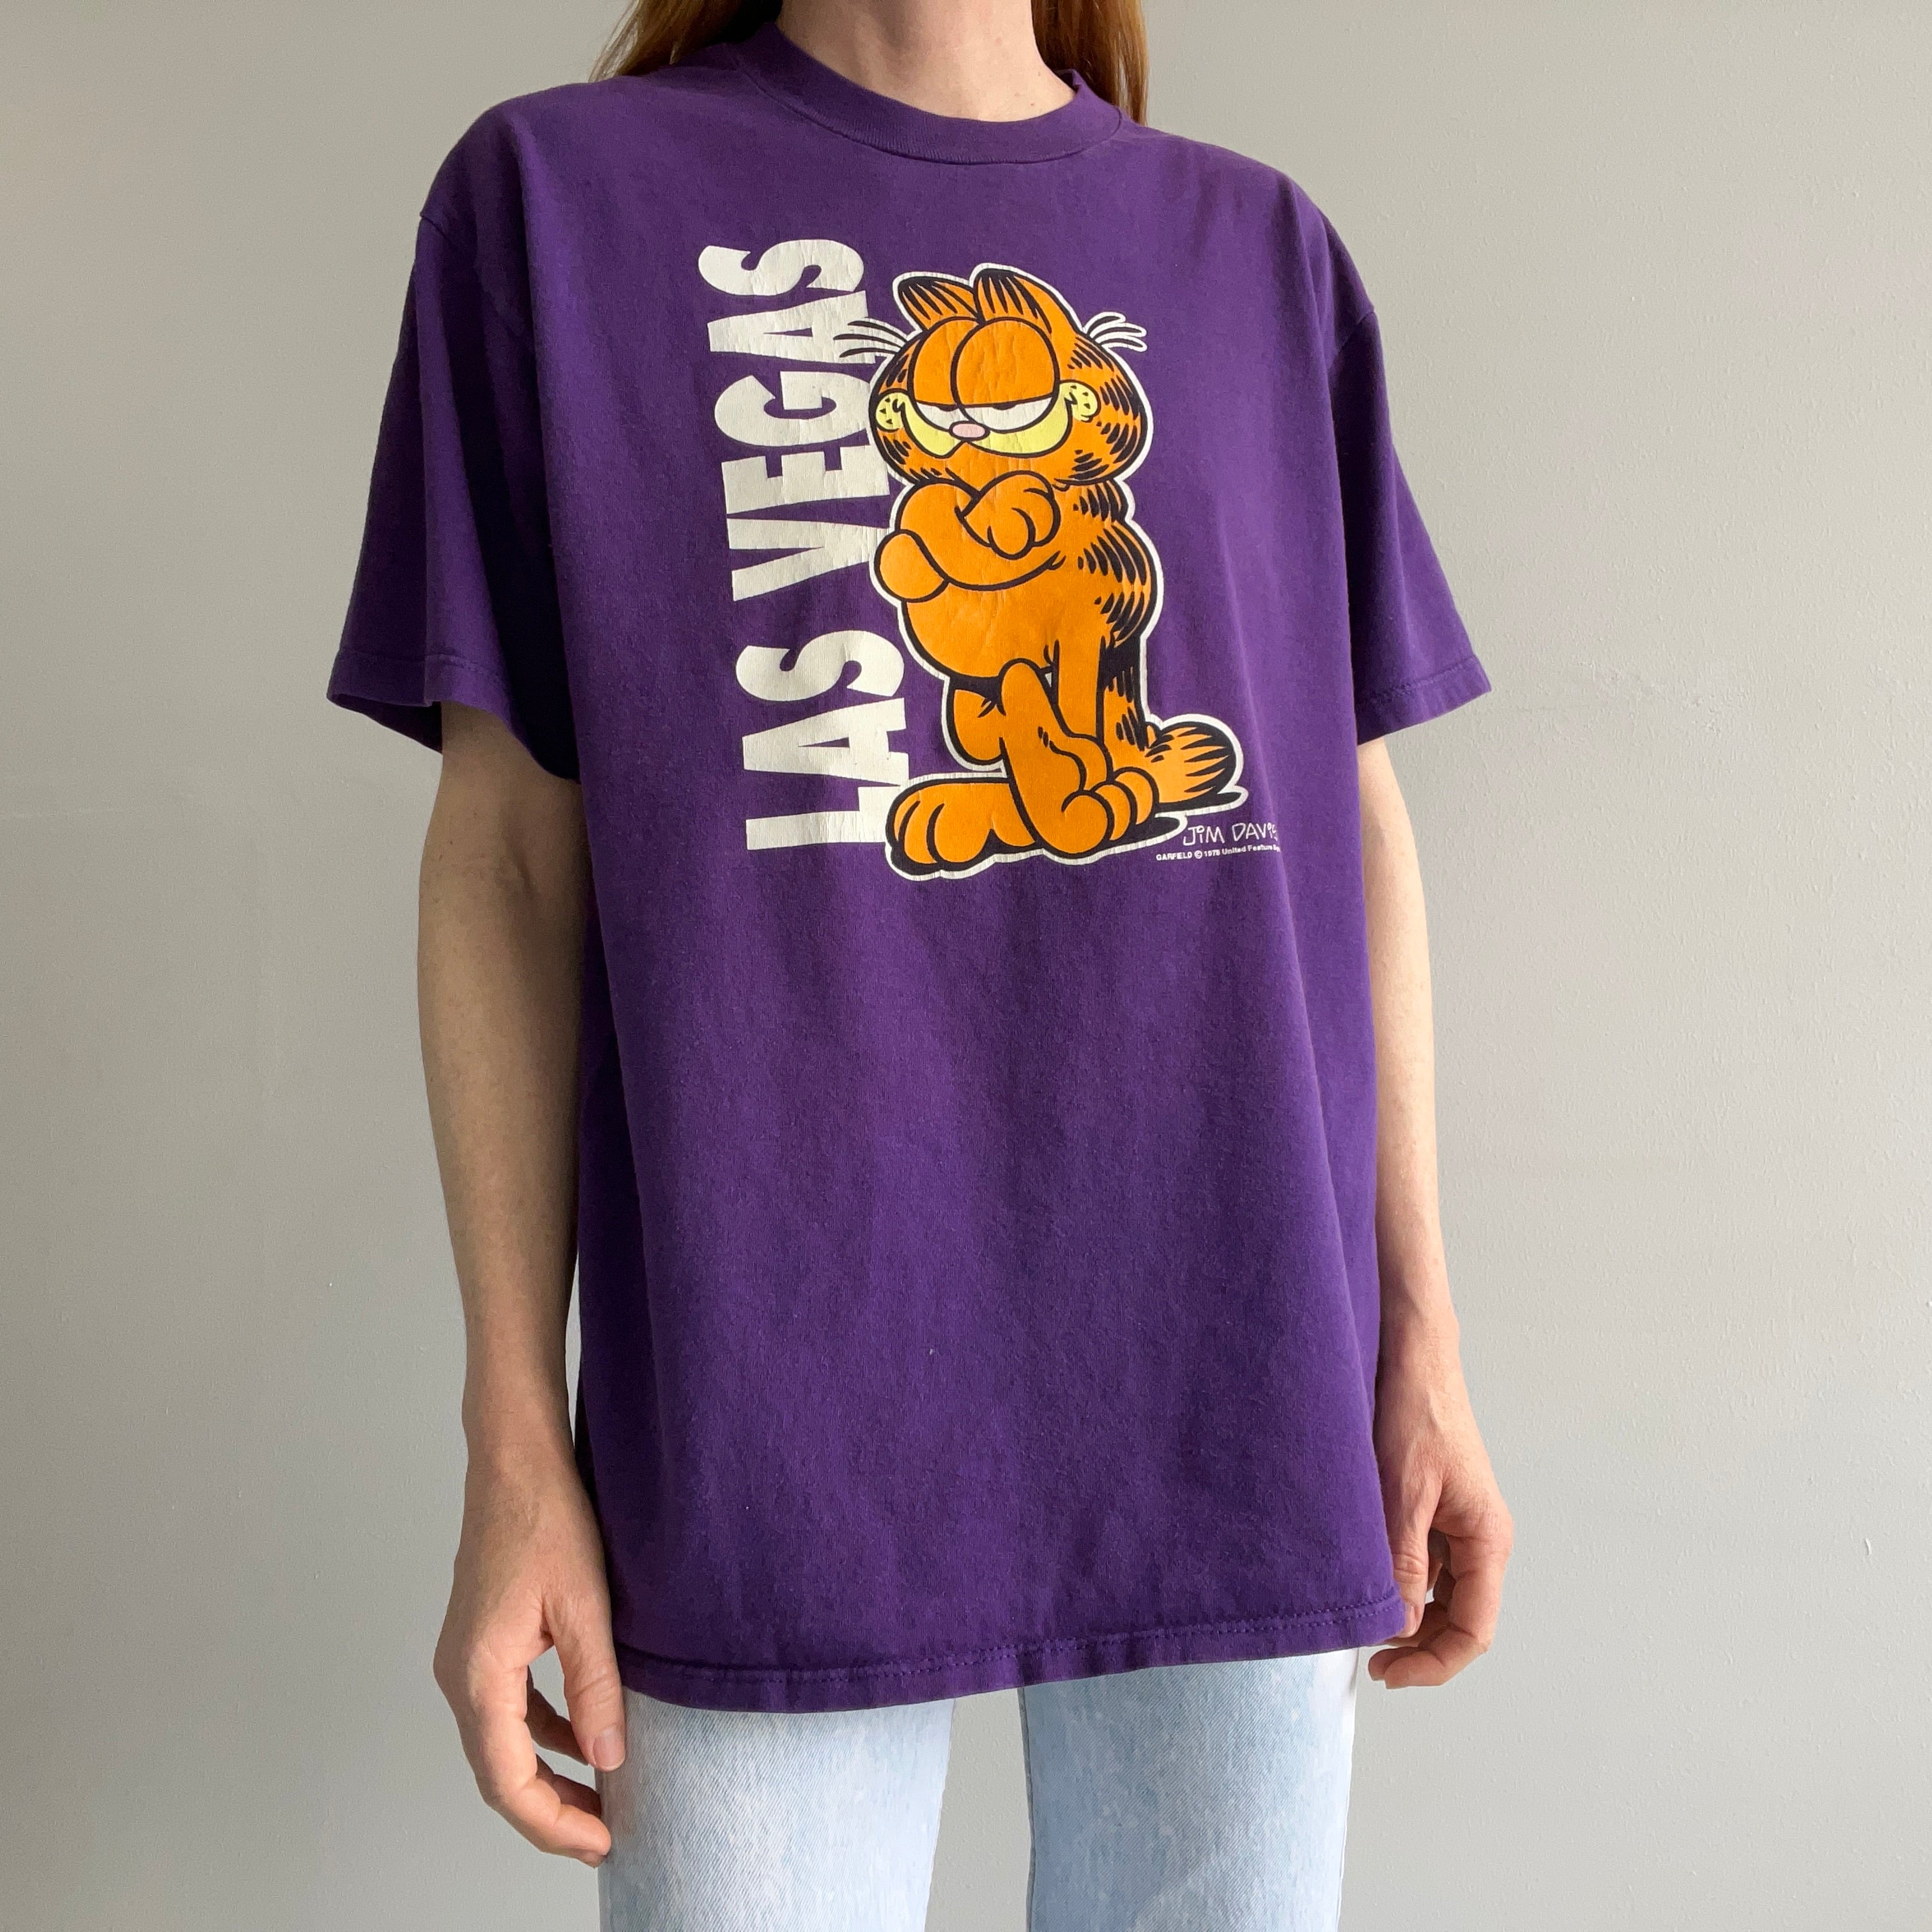 1978 Print on a 1990s Shirt - Garfield in Las Vegas by Velva Sheen